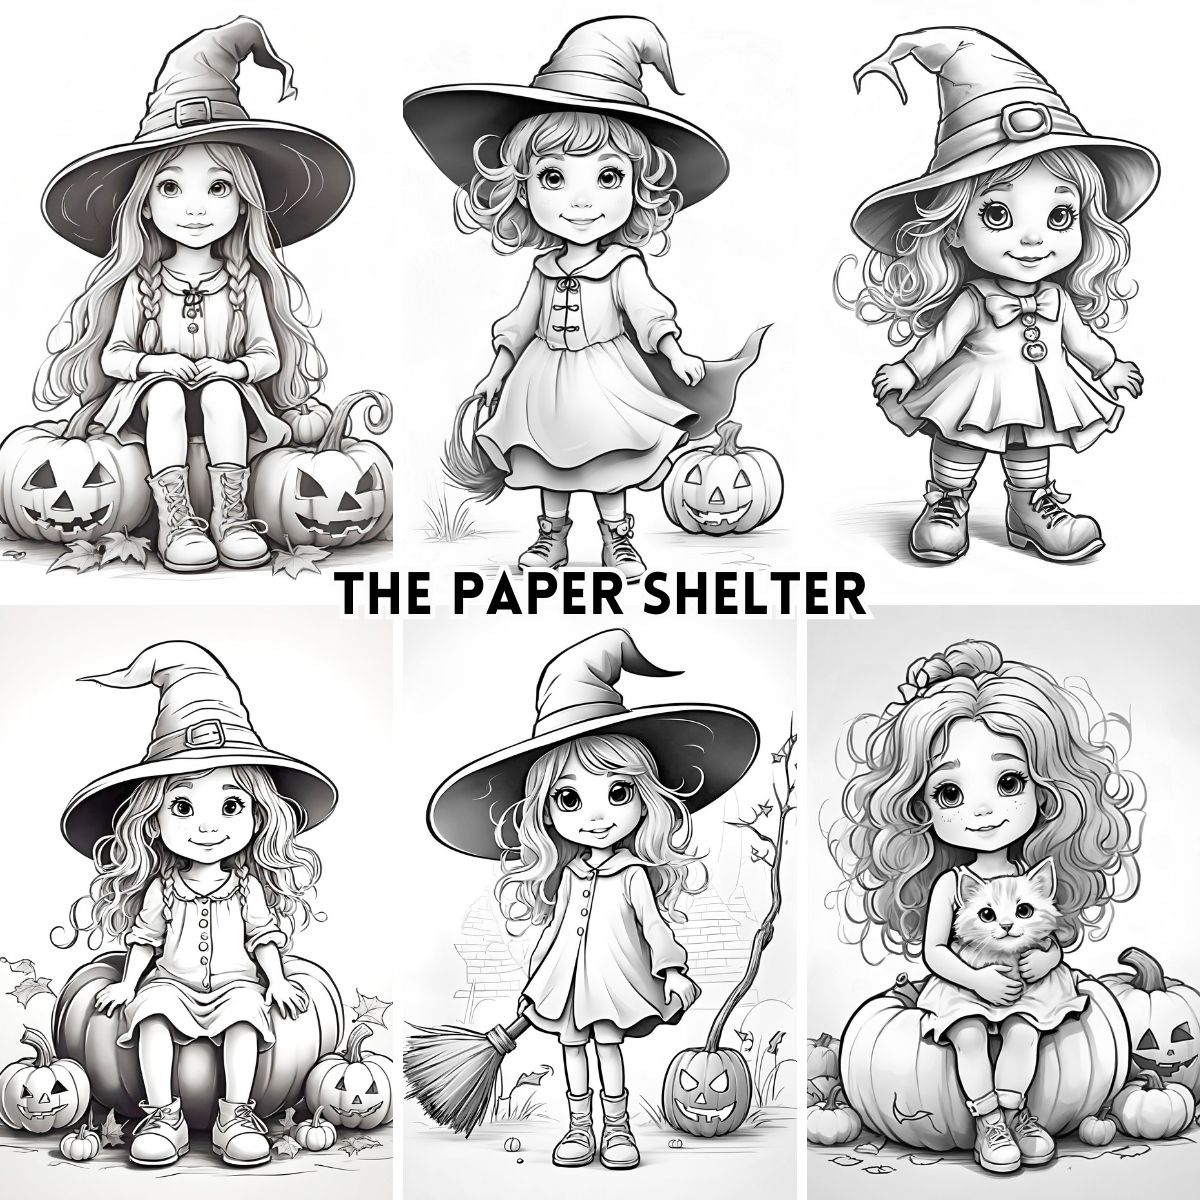 Charming Halloween Cuties - Digital Coloring Book